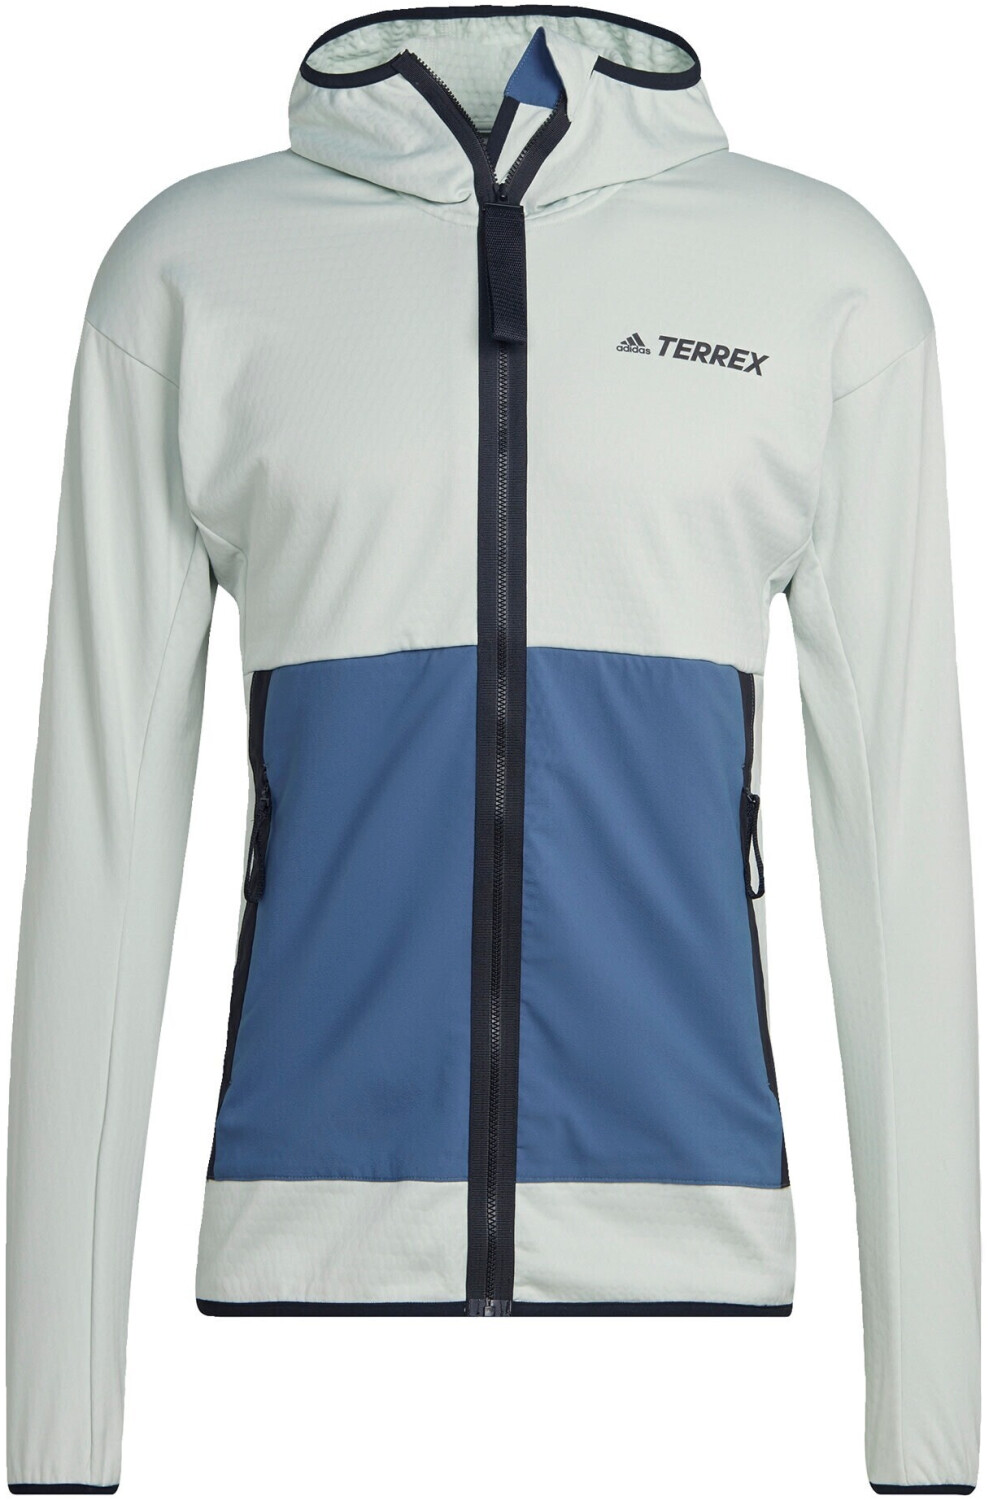 Deals from Hooded Buy Jacket Tech Lite on Fleece green/wonder (Today) £40.00 – steel Hiking Best Adidas linen Terrex